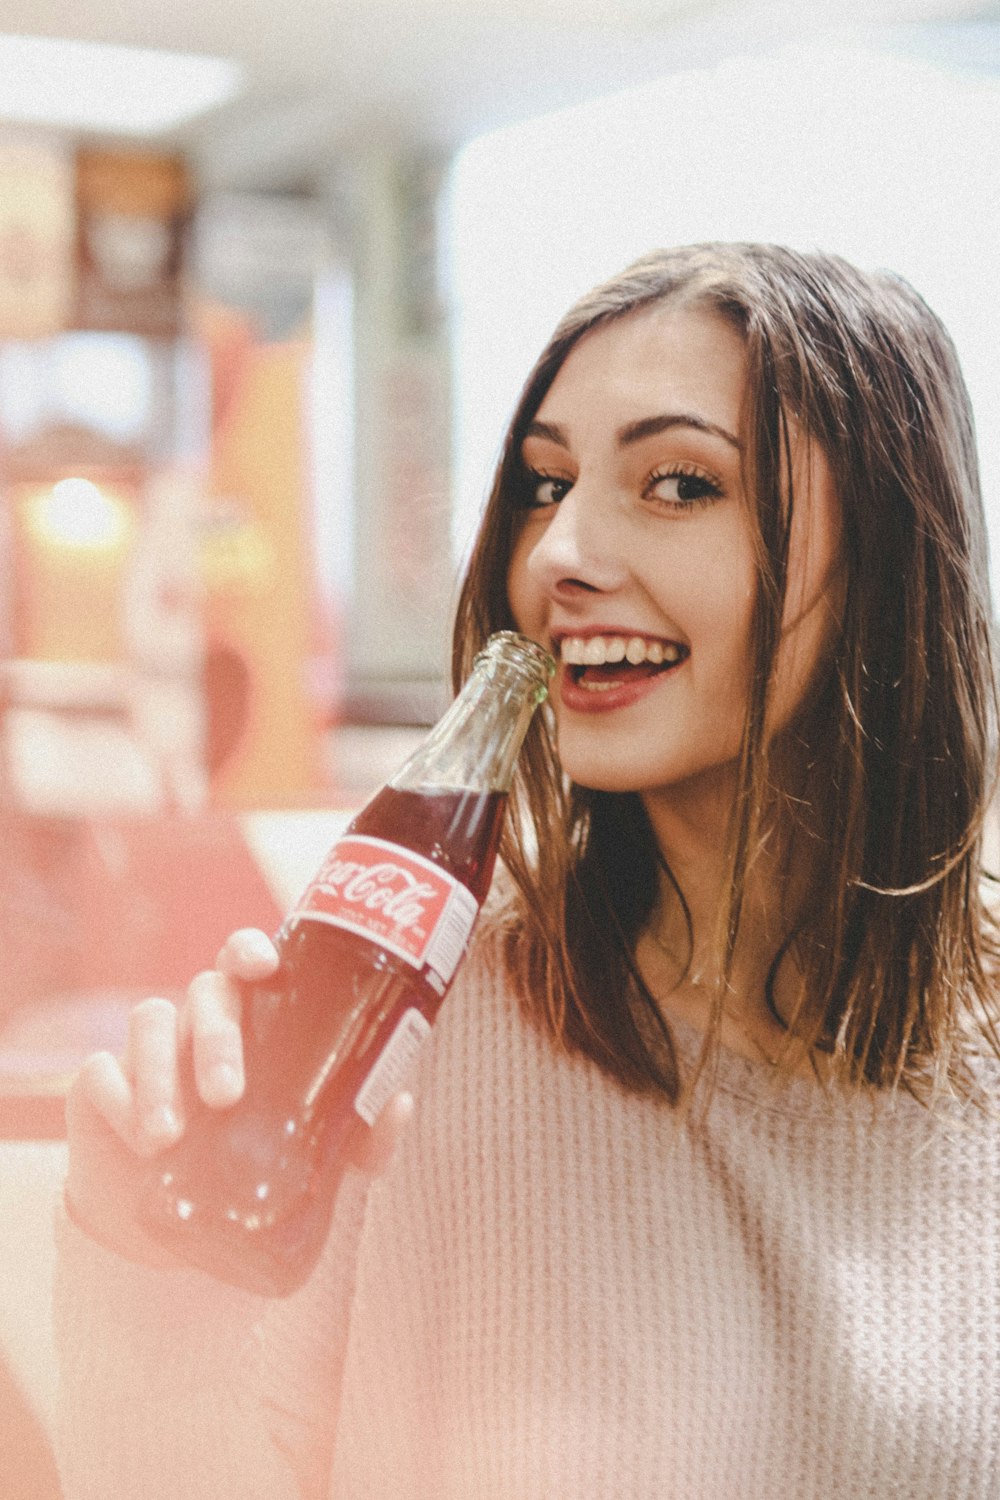 woman holding Coca-Cola bottle